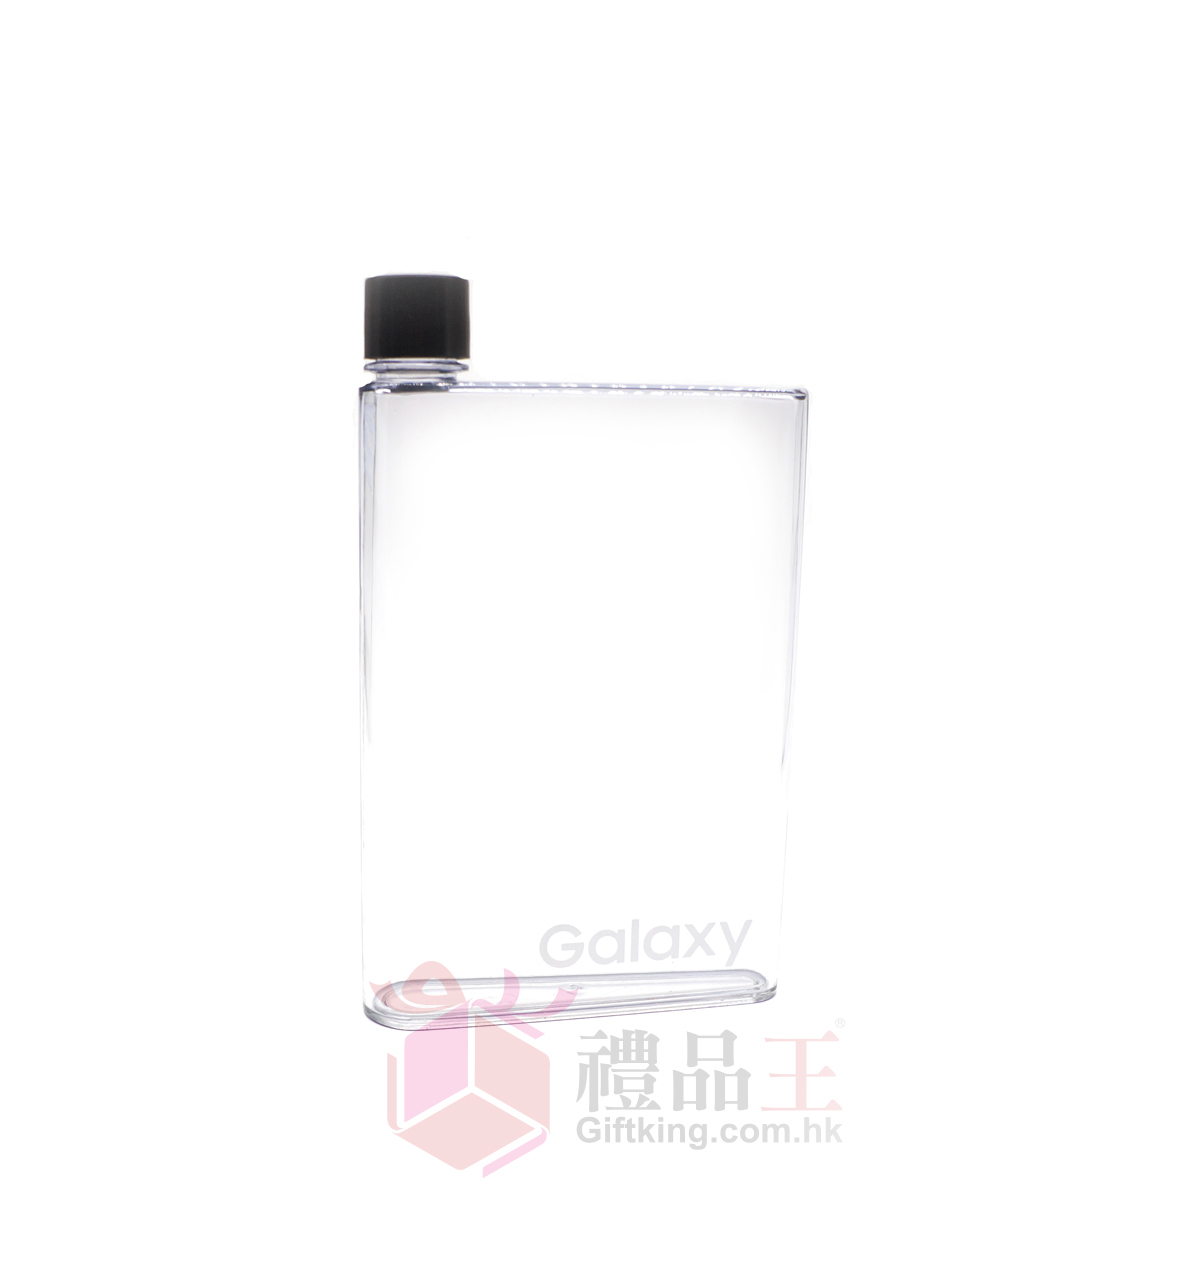 SAMSUNG Galaxy S10 Flat Bottle (Homeware Gift)